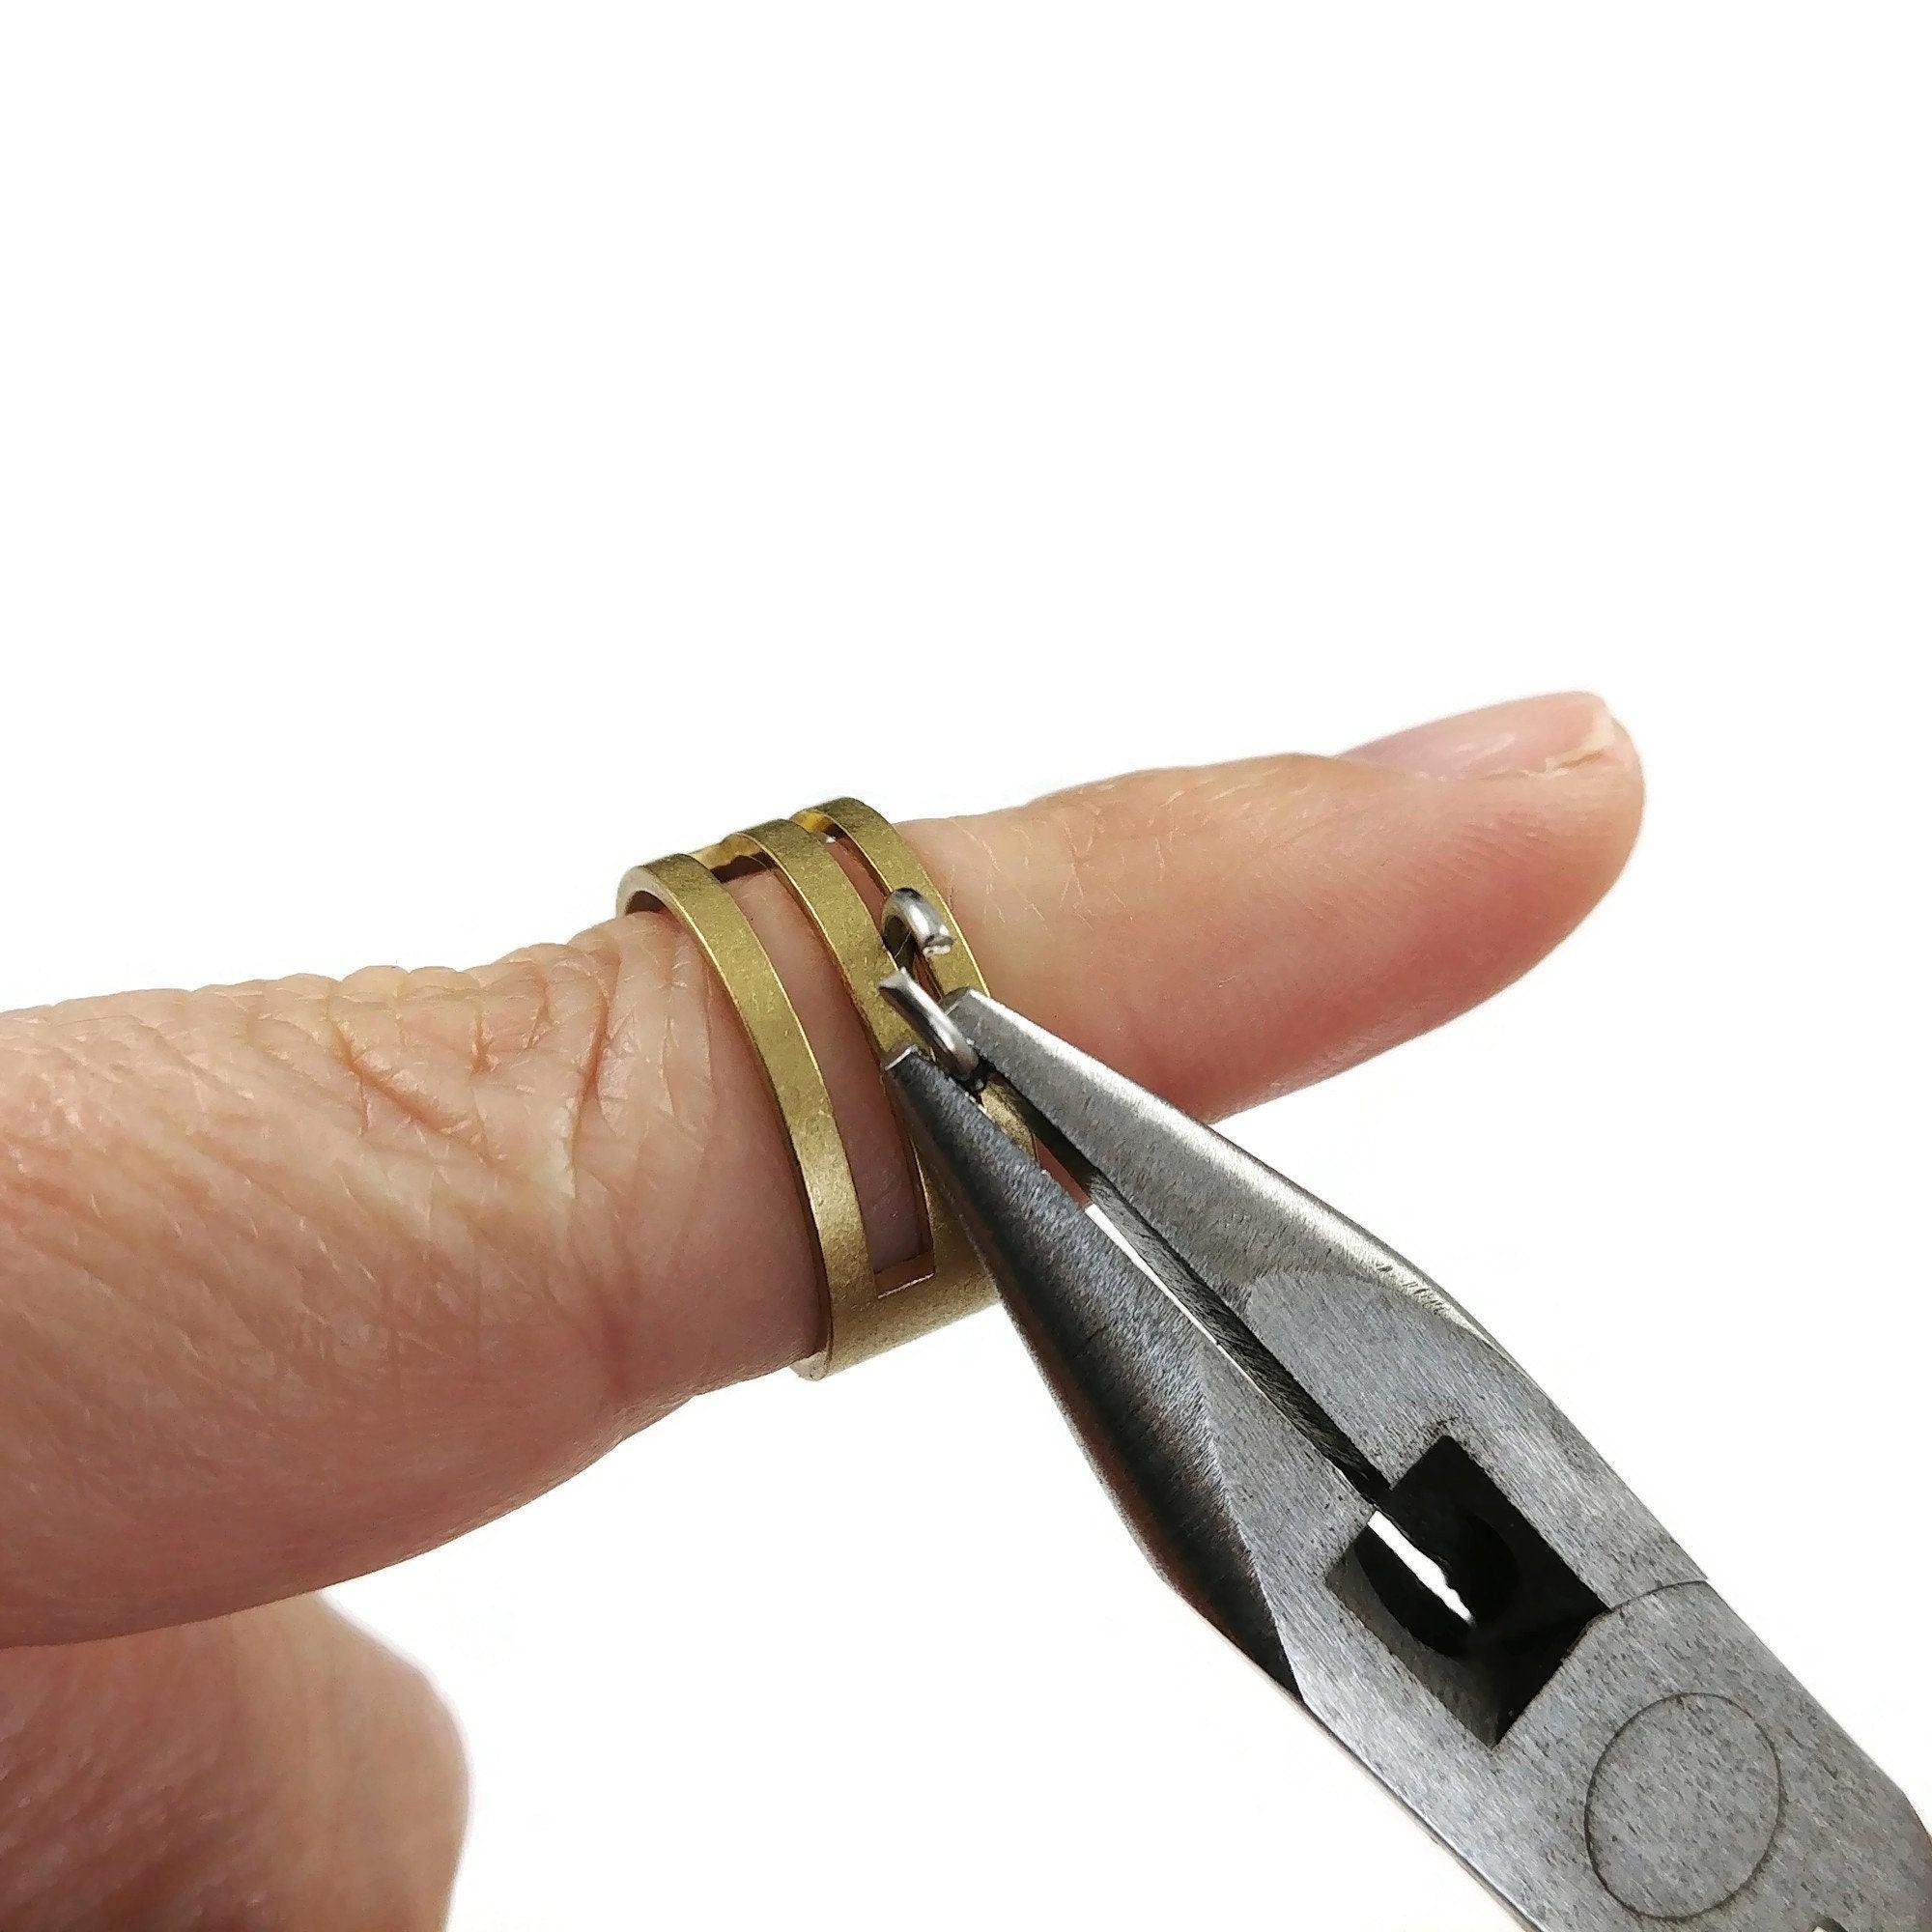 Jump ring opener closer tool, Jewelry making brass finger tool, Nickel